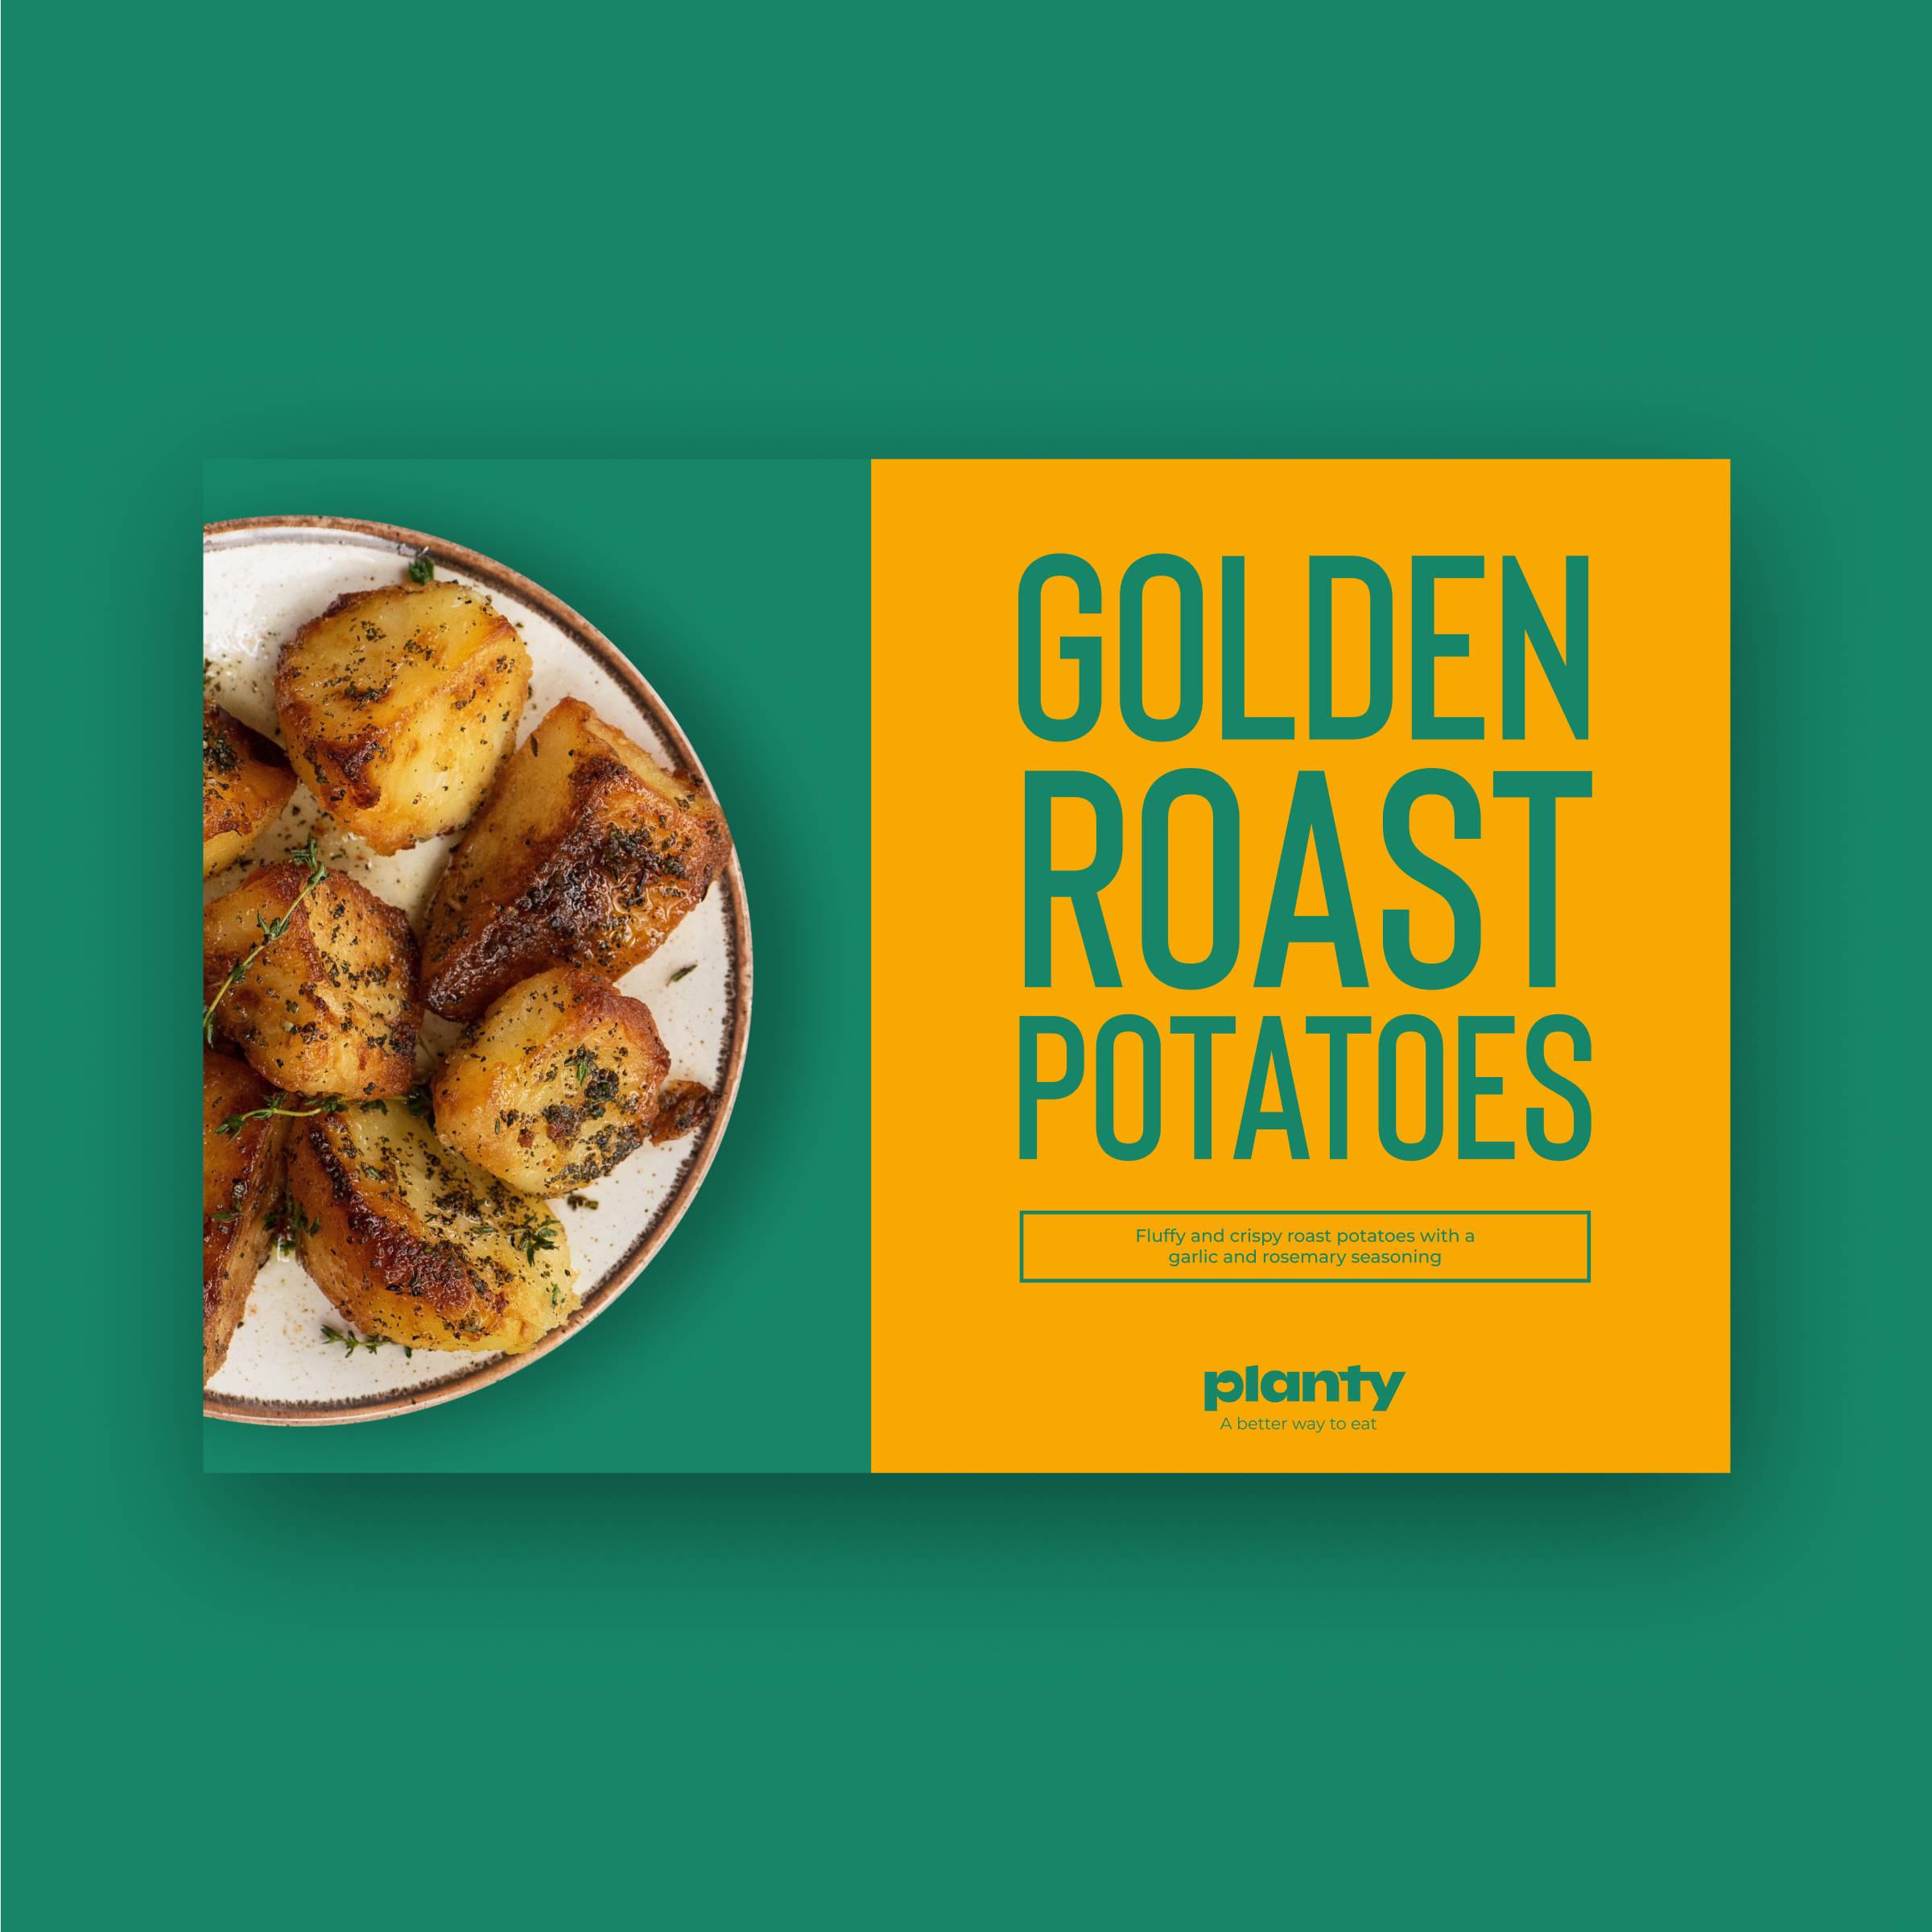 Golden Roast Potatoes image 2